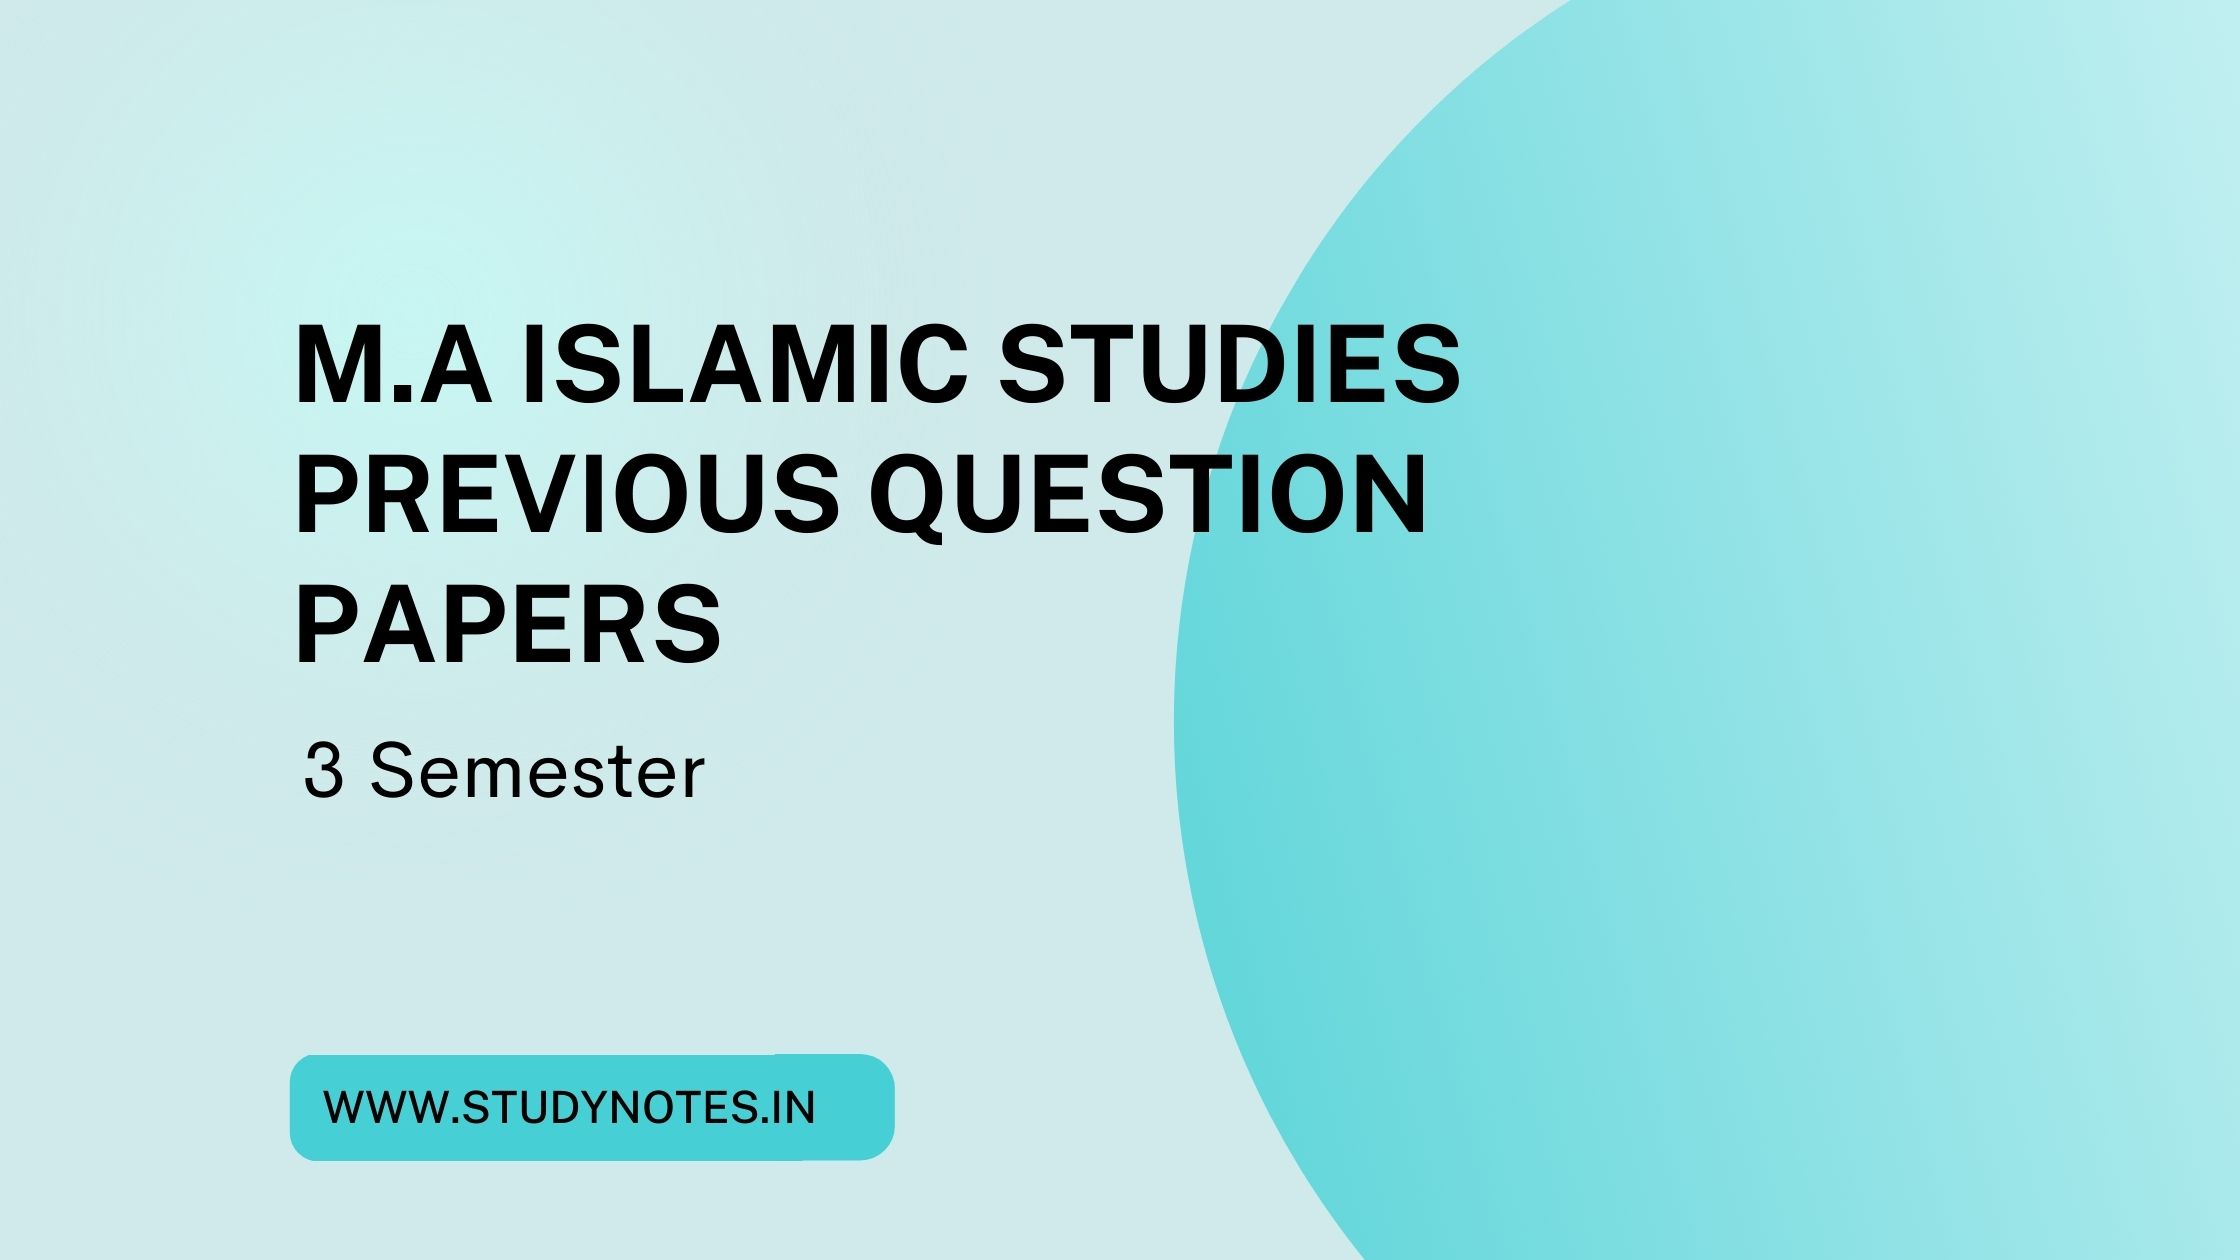 Third Semester M.A Islamic Studies Previous Question Paper